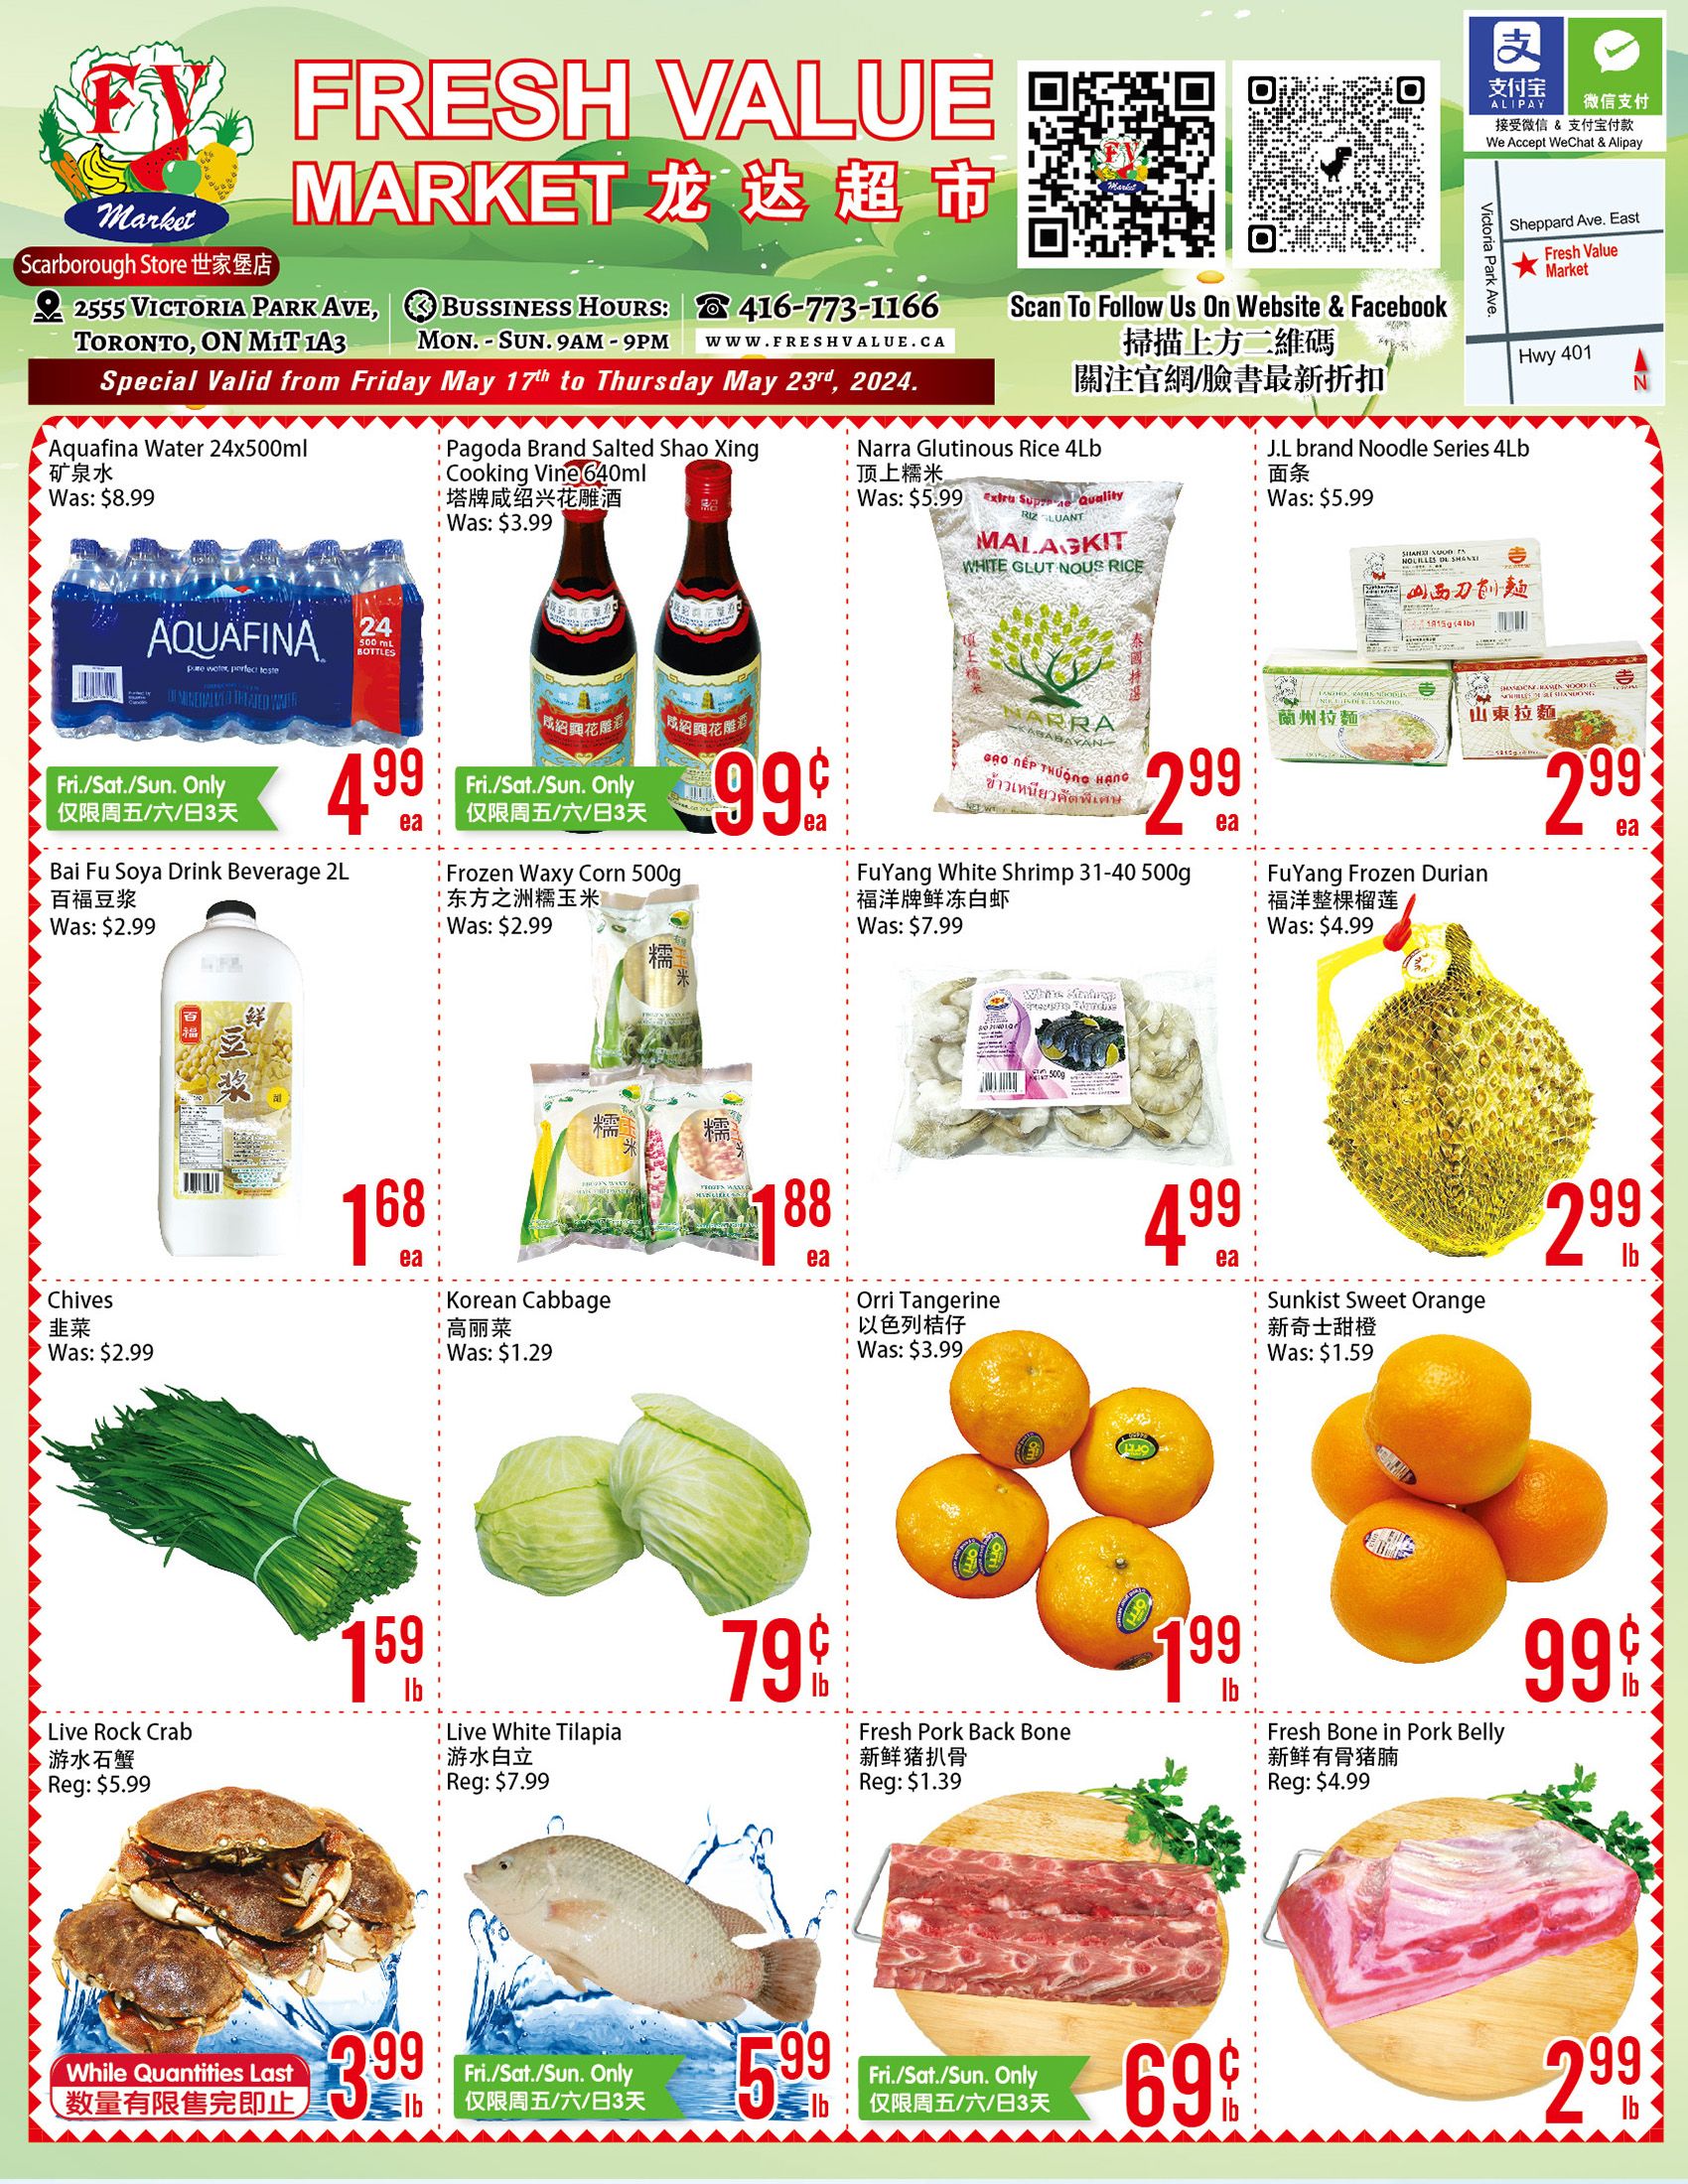 Fresh Value Market - Scarborough Store - Weekly Flyer Specials